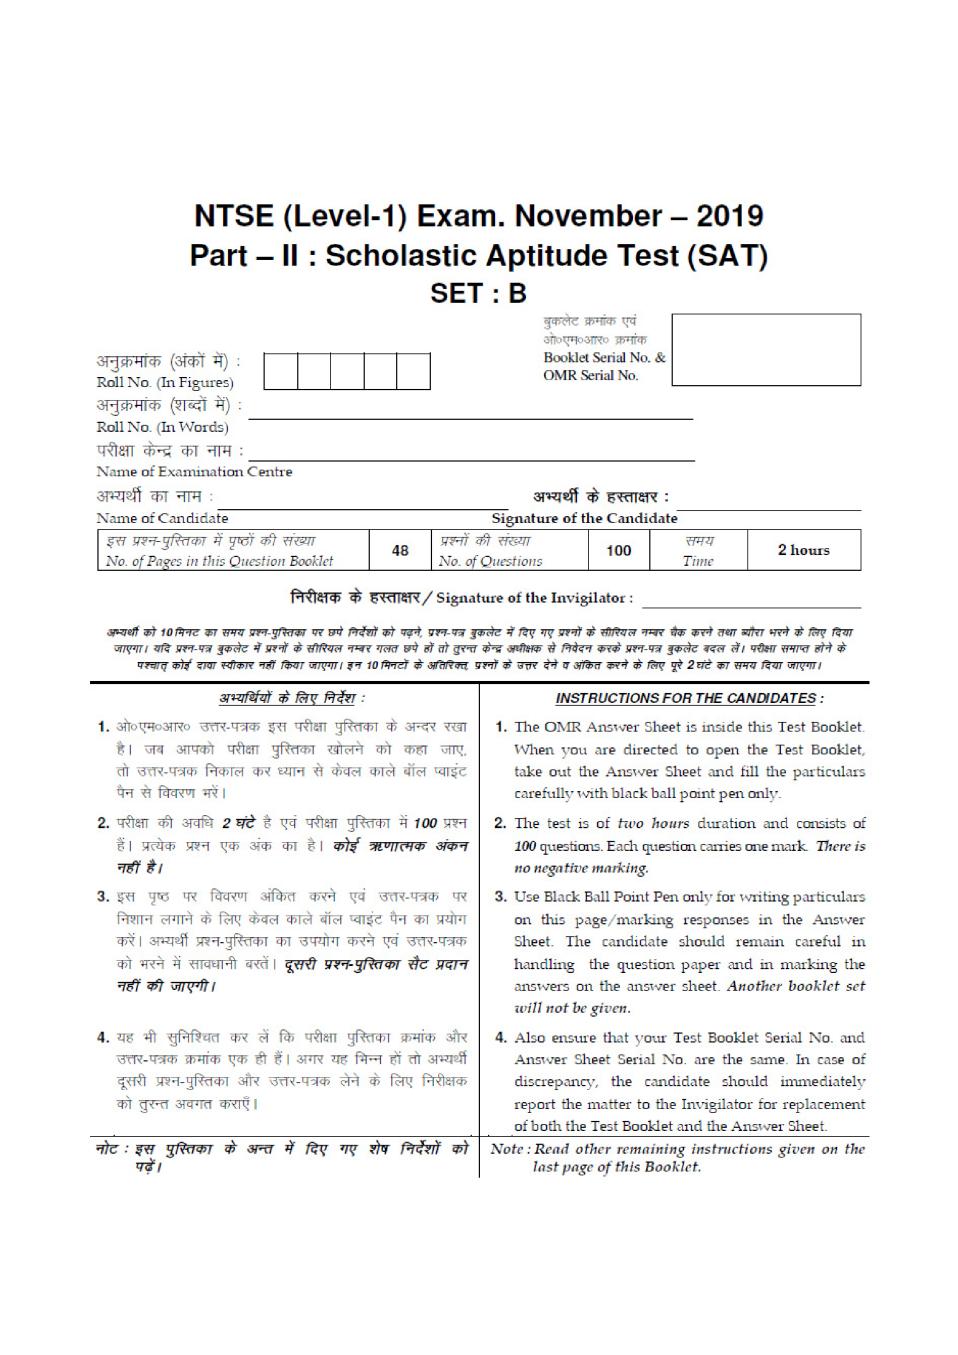 Haryana NTSE Nov 2019 SAT Question Paper Set B - Page 1